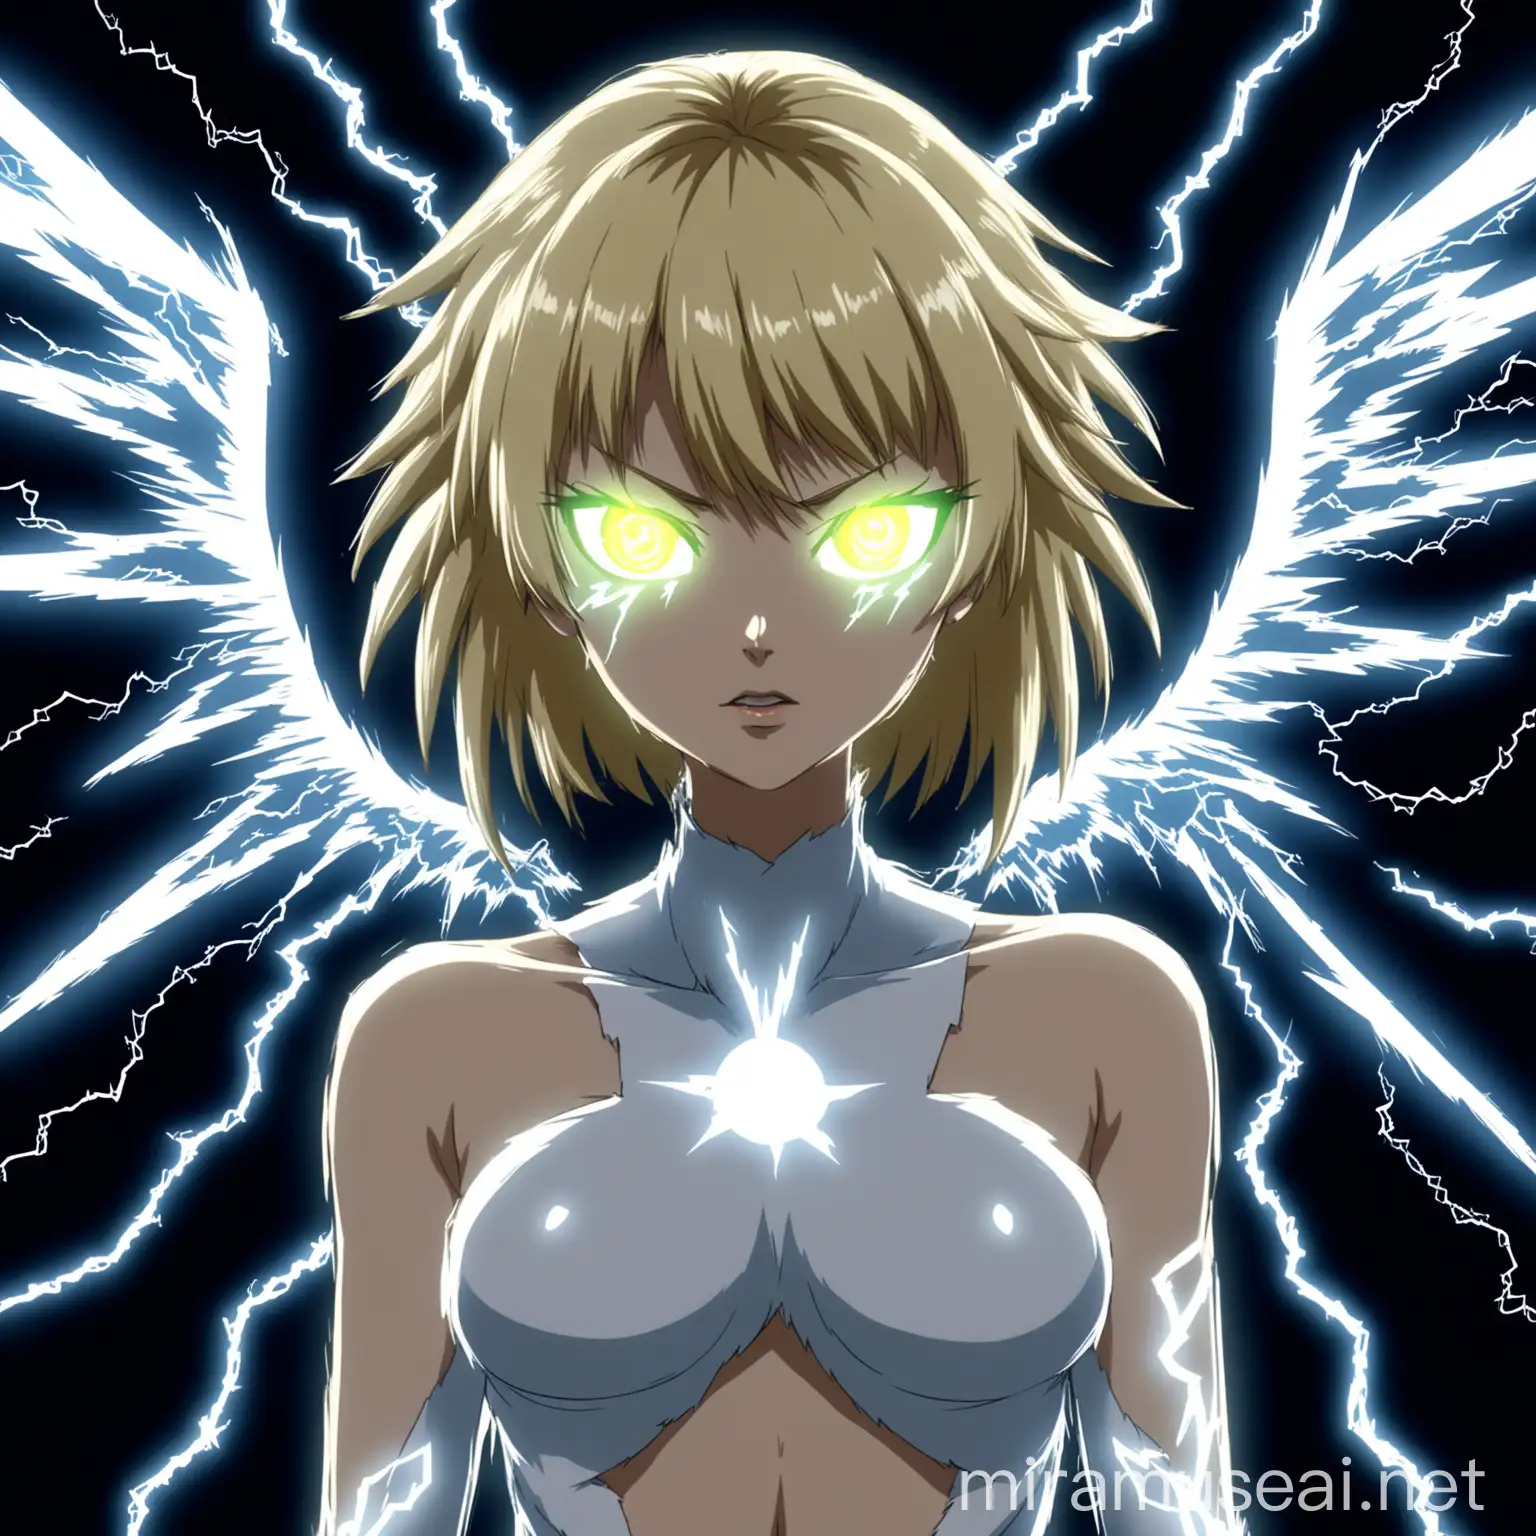 Anime Lightning Angel with Wolfcut Blonde Hair